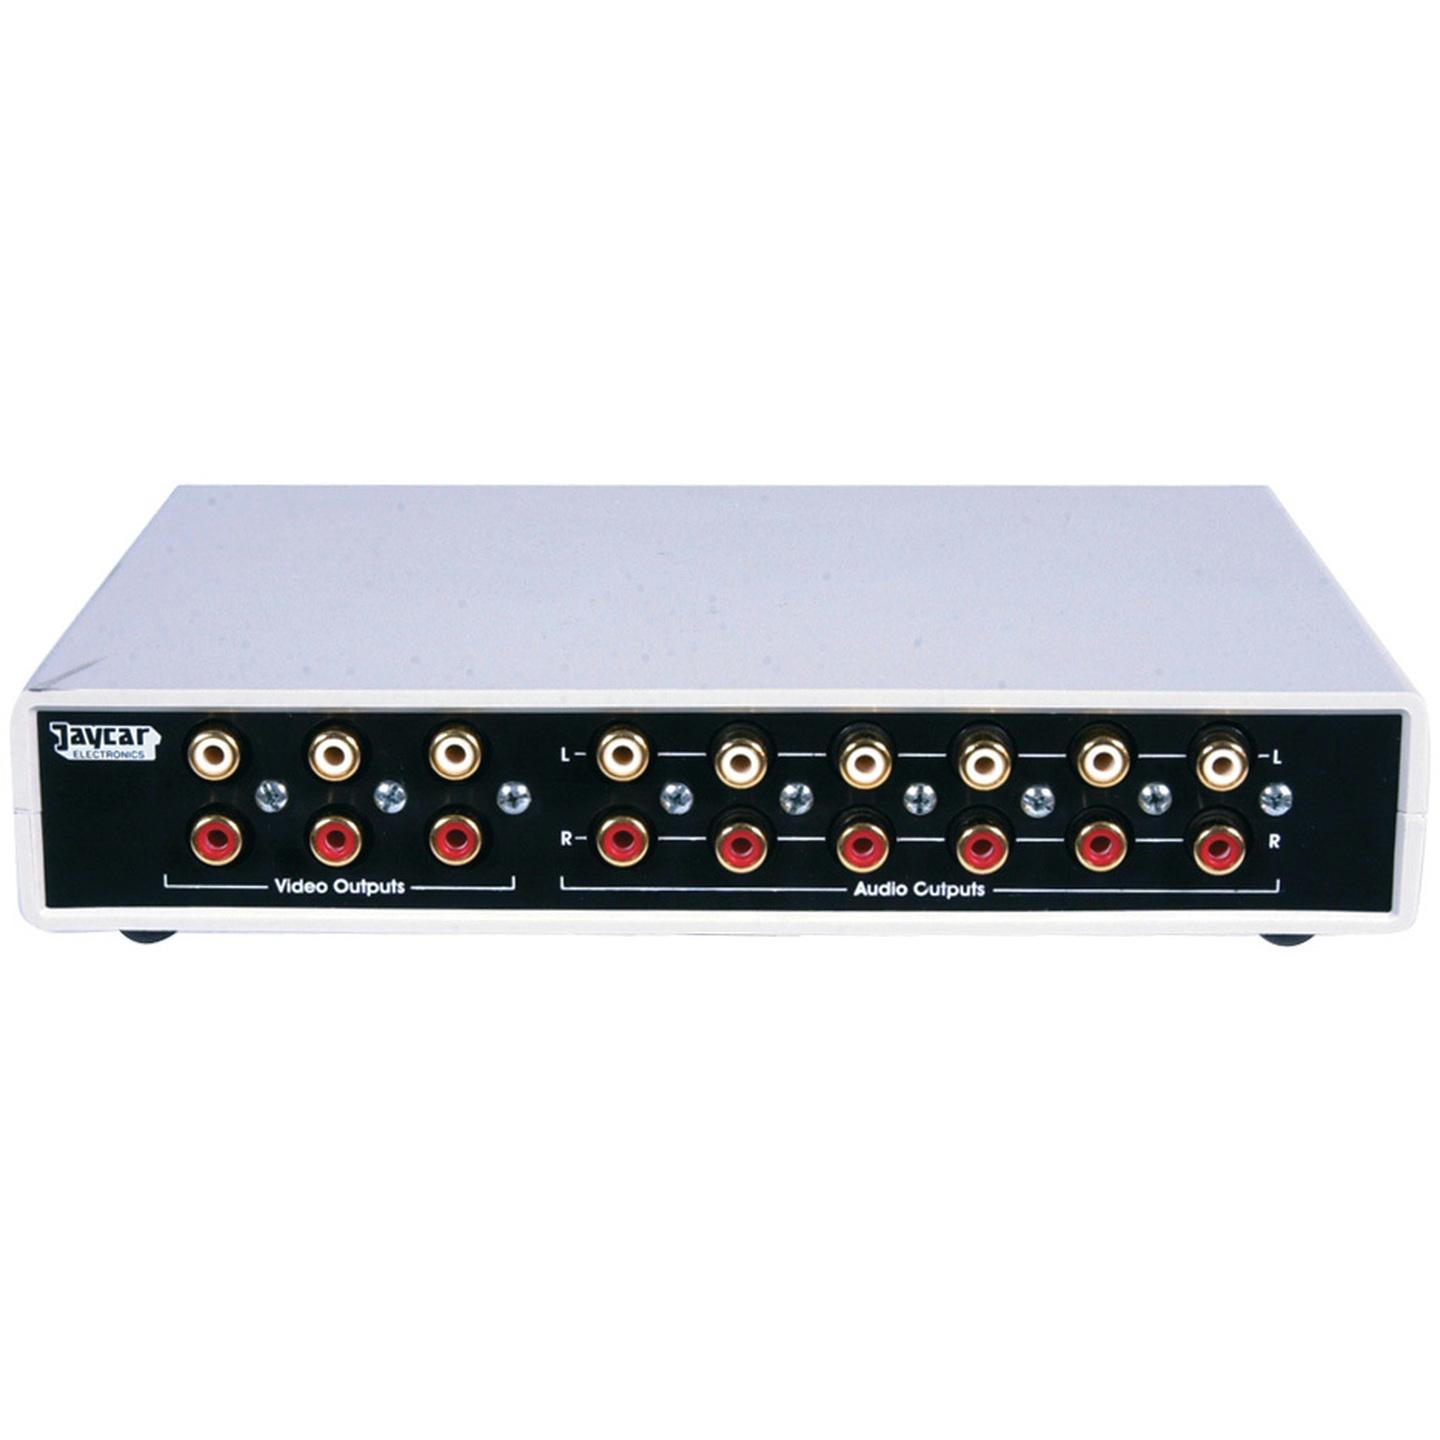 Low Cost Composite Video/Audio Distribution Amplifier Kit Back Catalogue